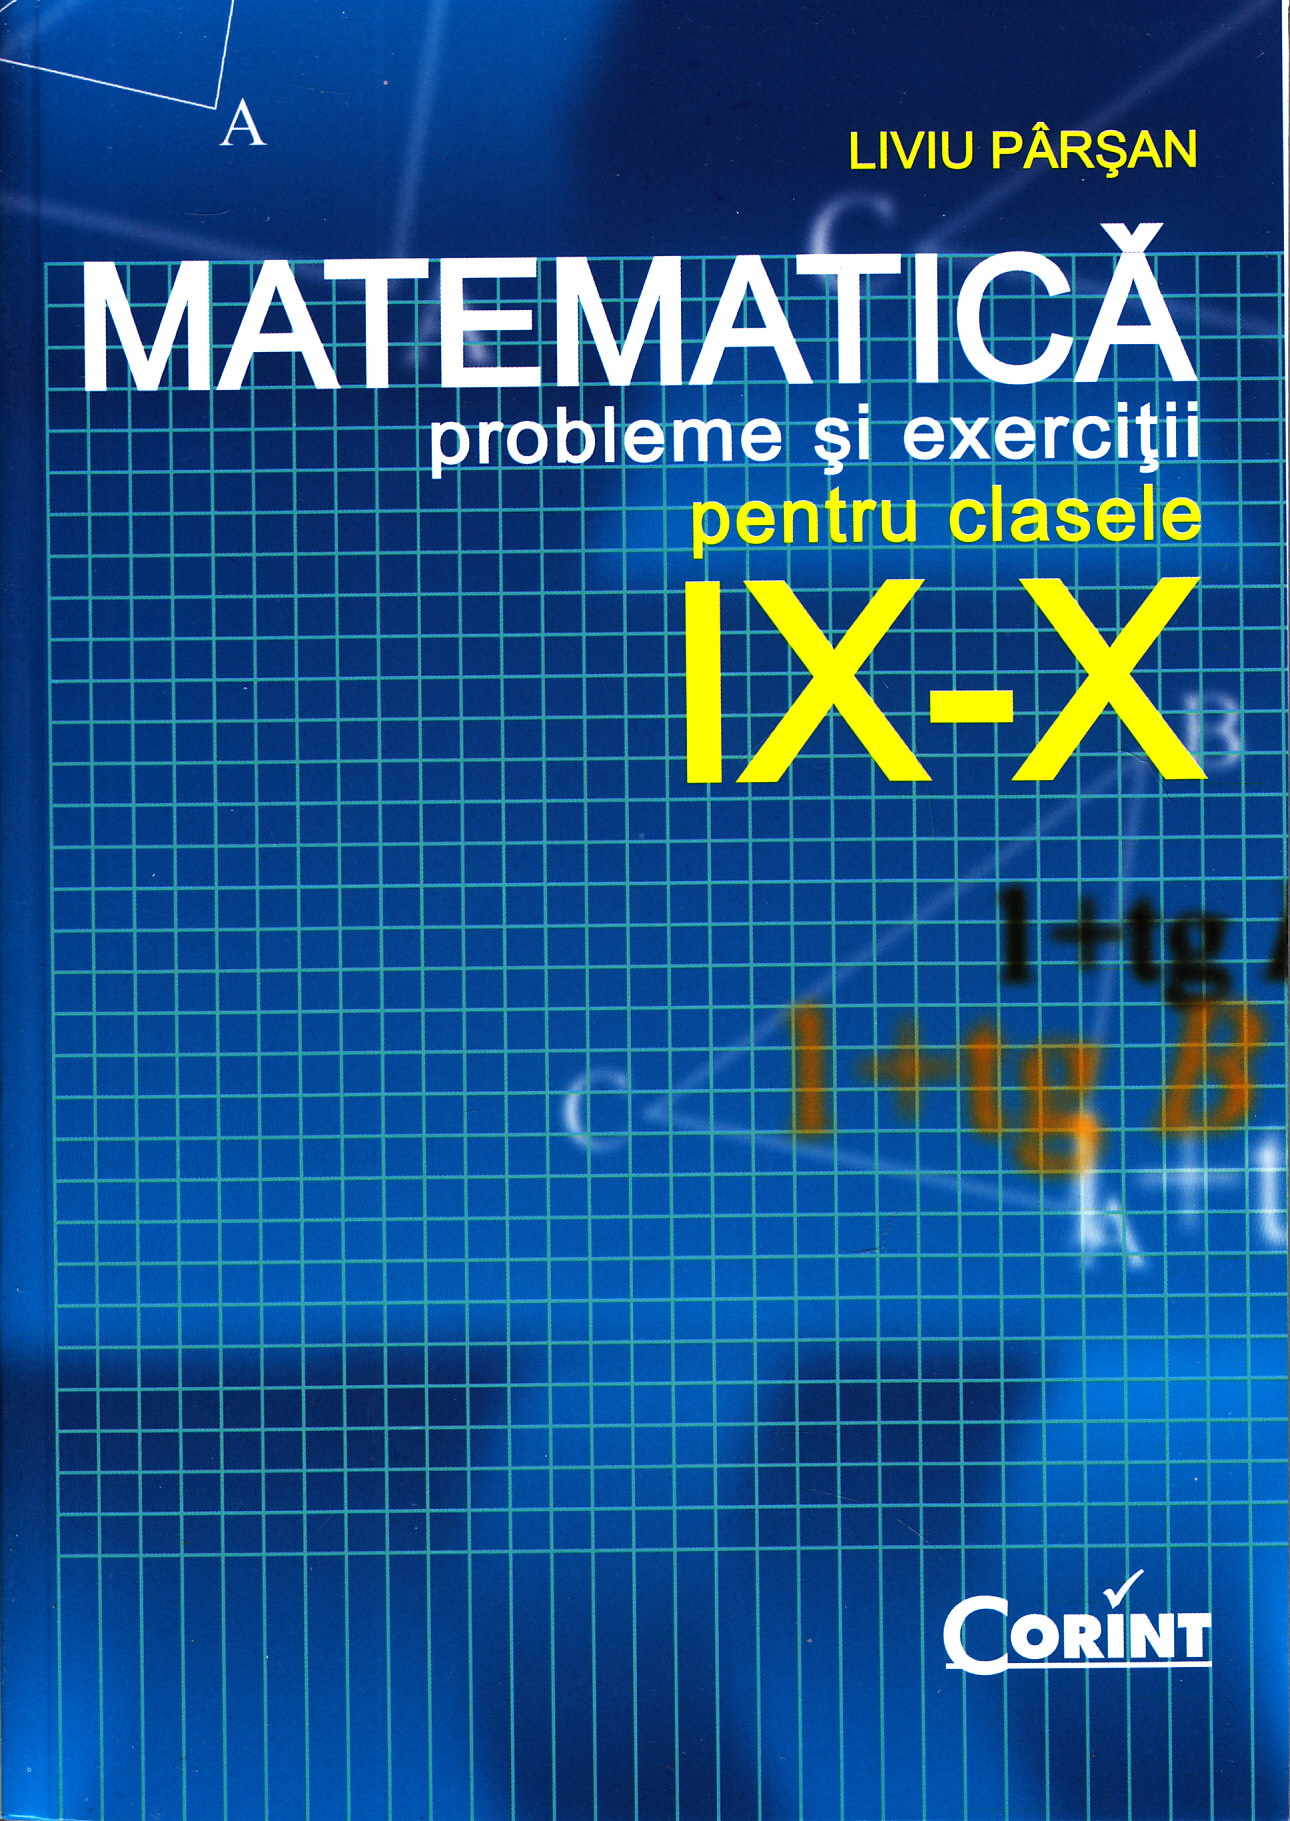 Matematica clasa 9-10 - Probleme si exercitii - Liviu Parsan